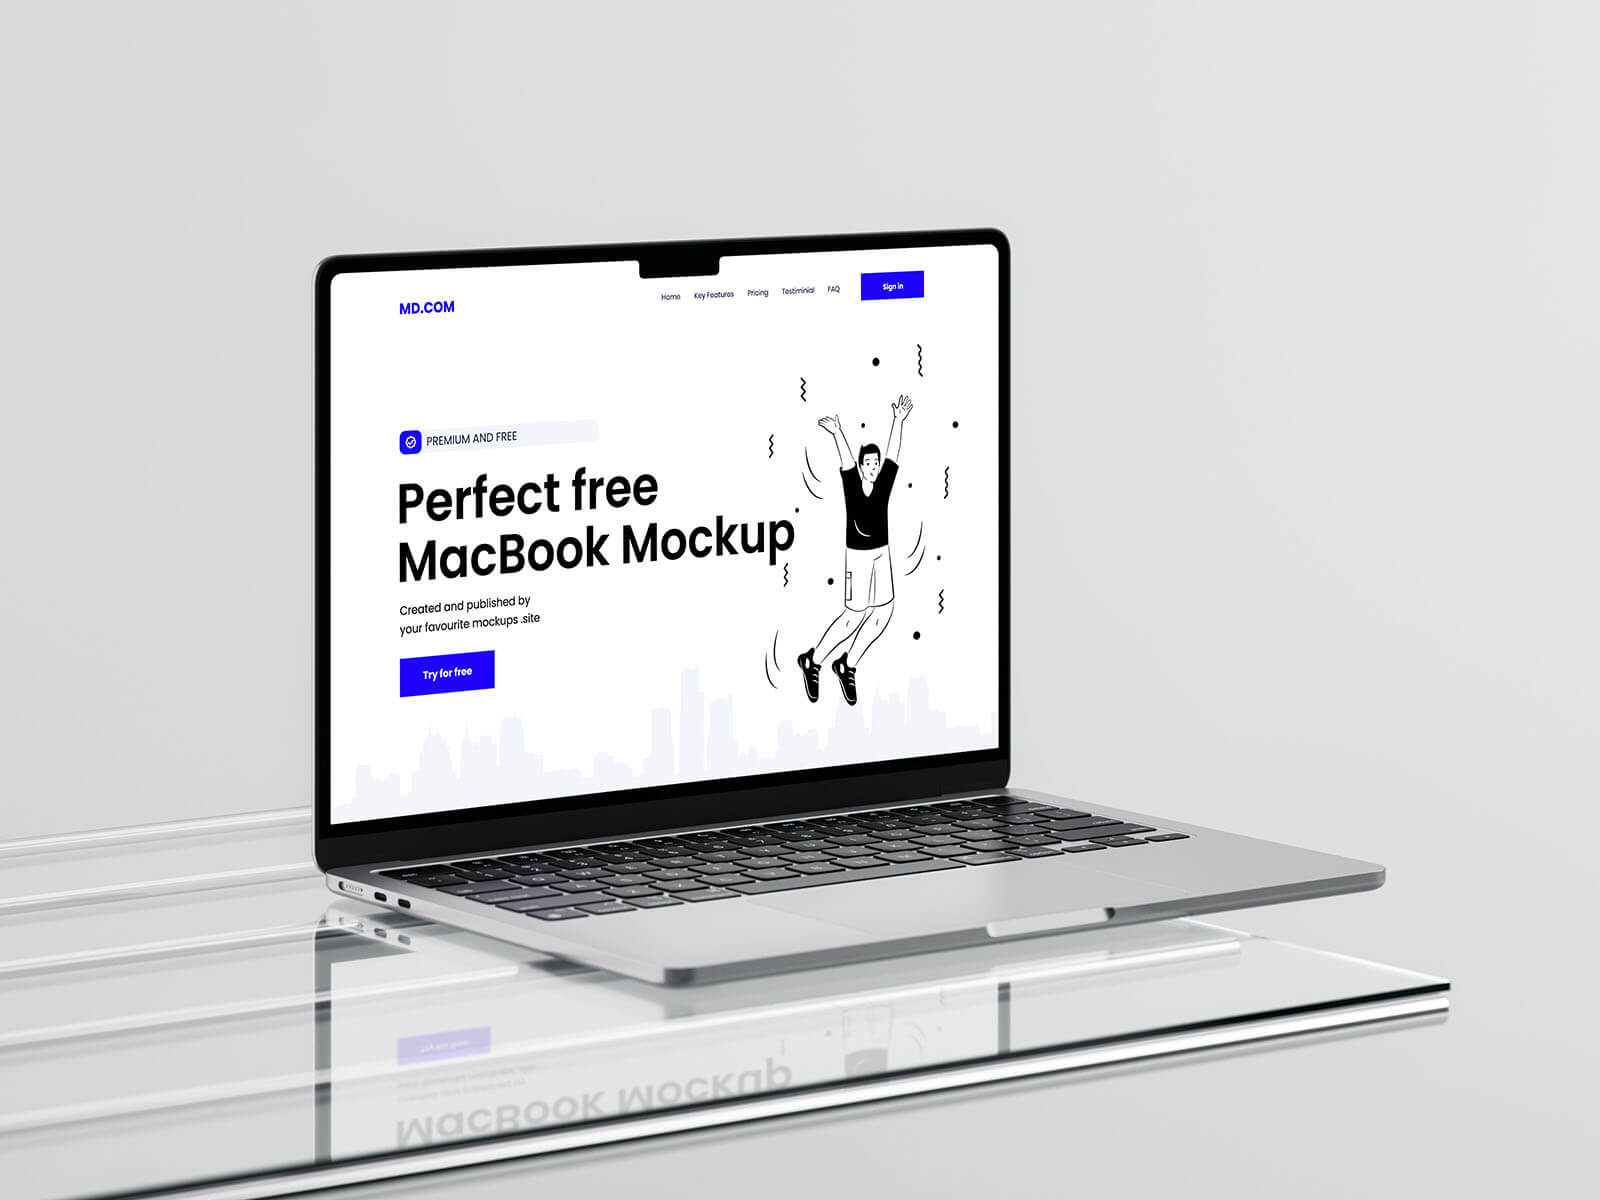 Free M2 MacBook Air Mockup PSD Set